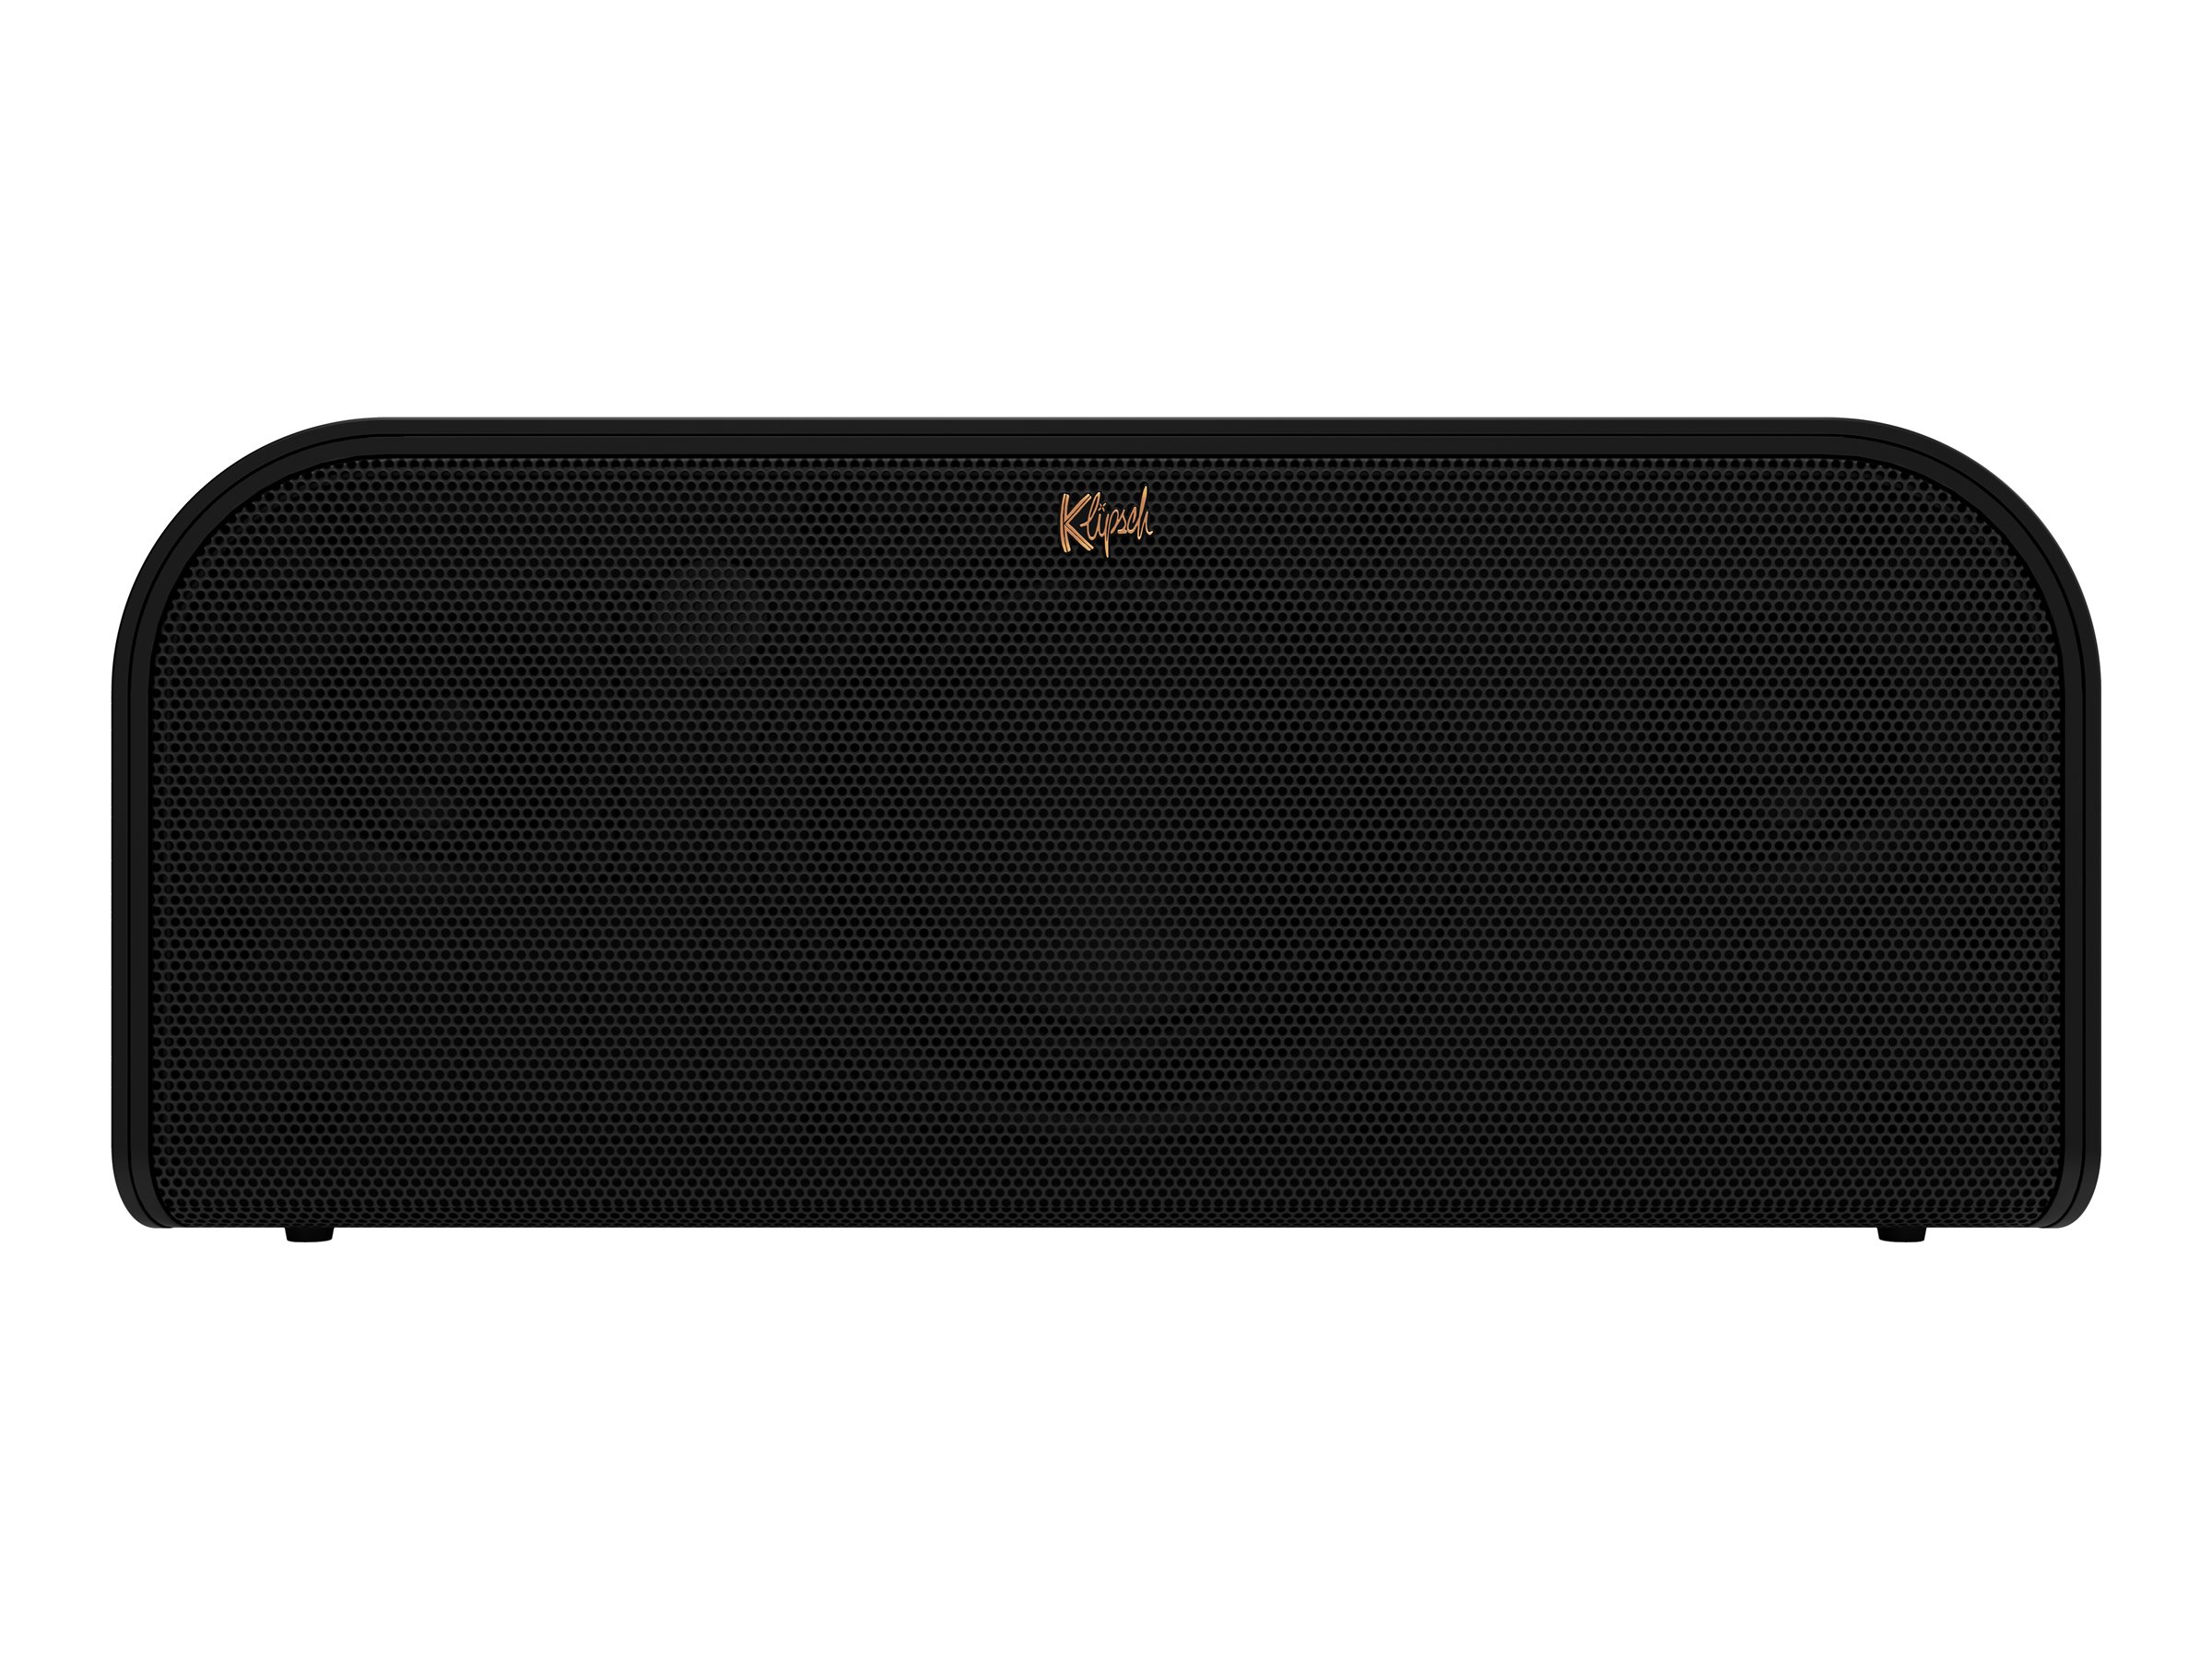 Klipsch Groove XXL Portable Bluetooth Speaker - Black - GROOVEXXL - Open Box or Display Models Only